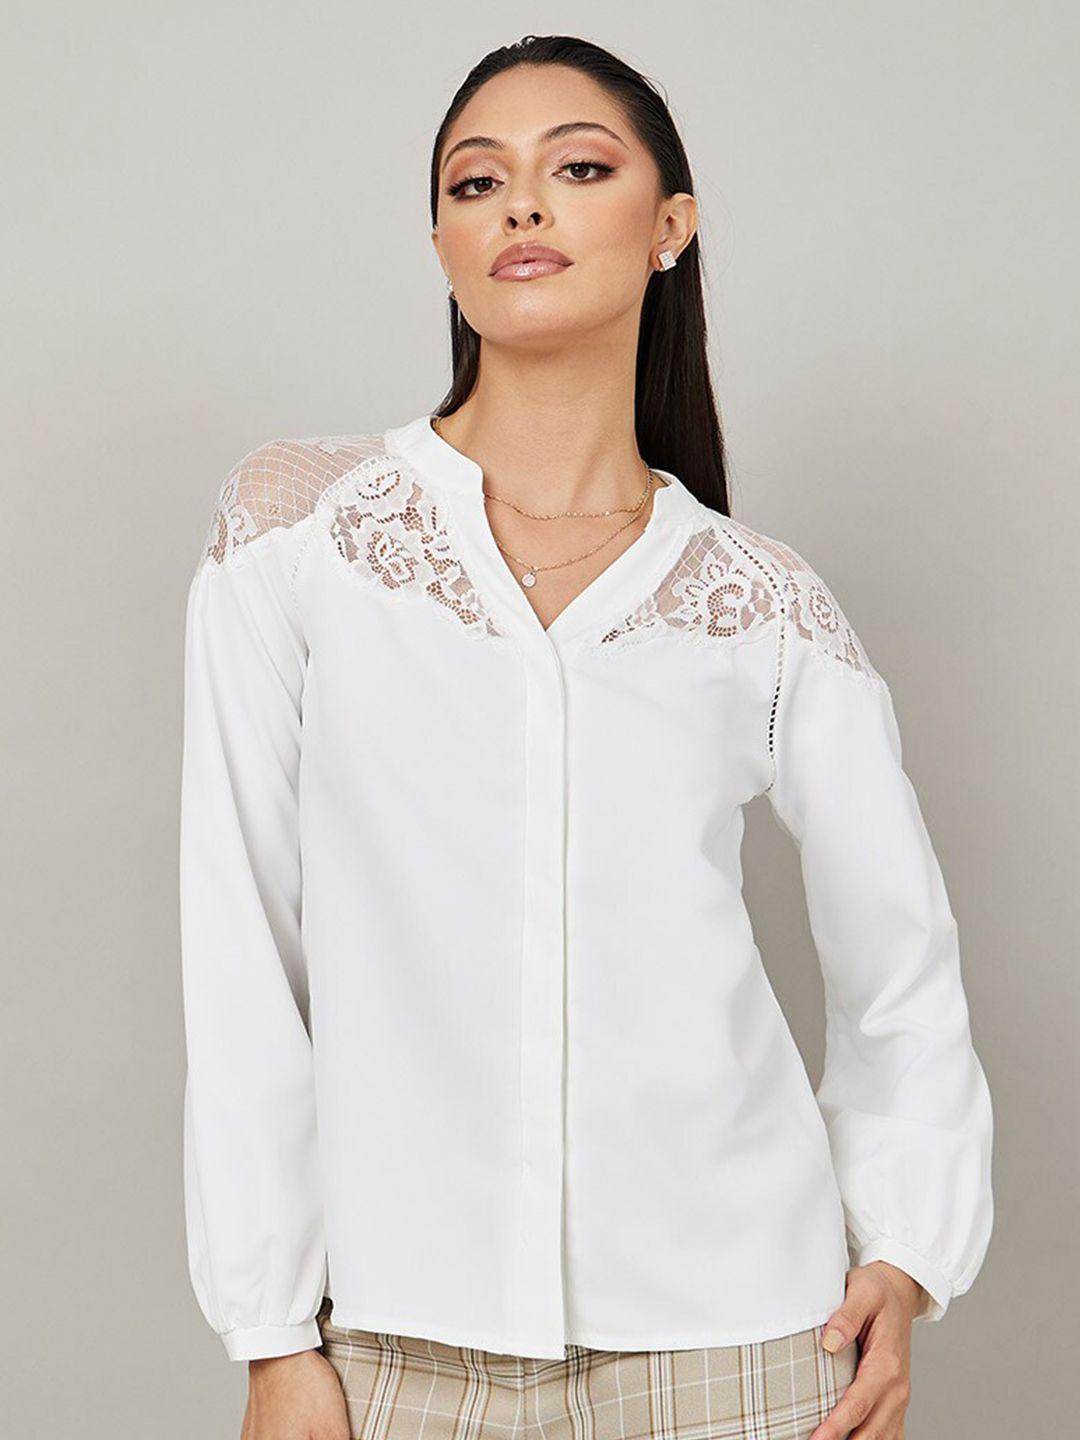 styli-white-mandarin-collar-shirt-style-top